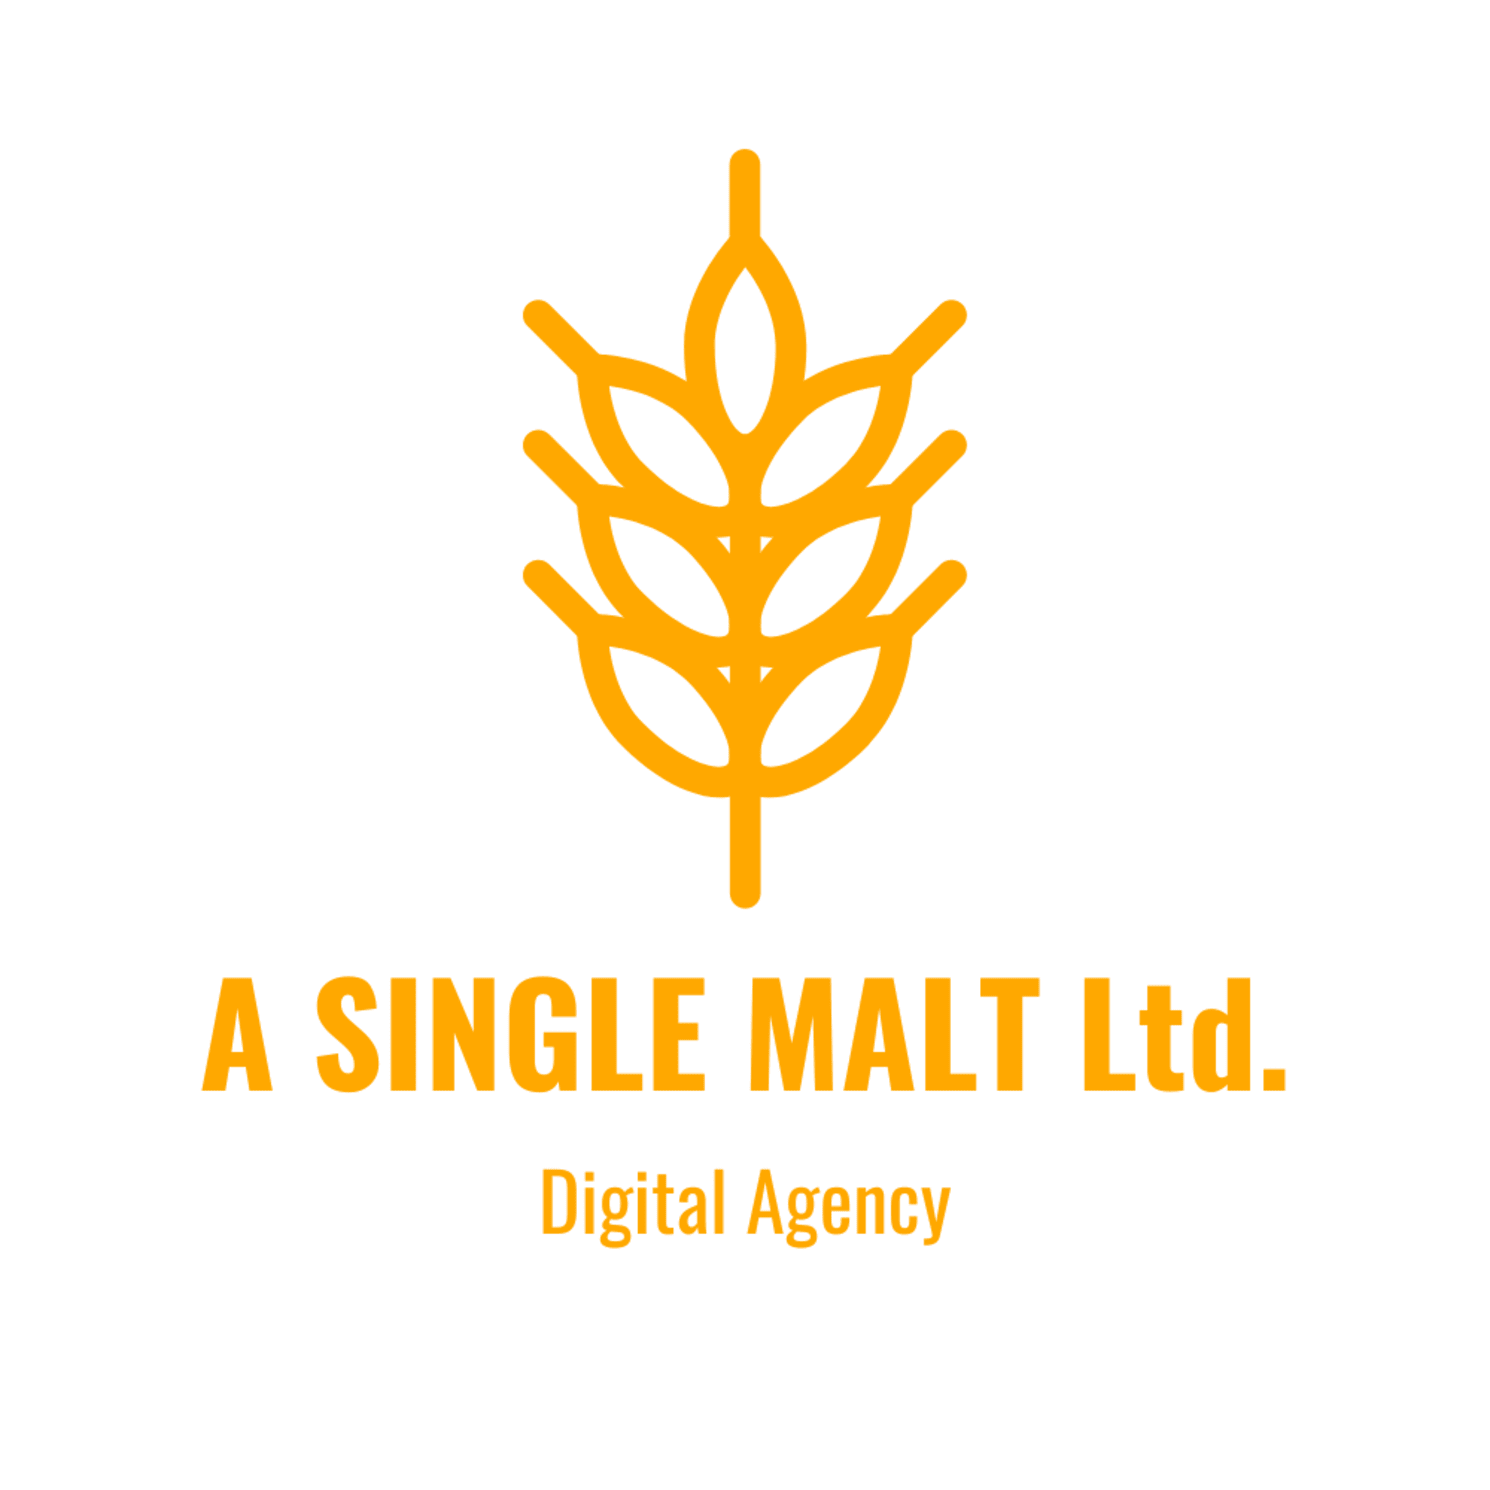 A Single Malt Ltd